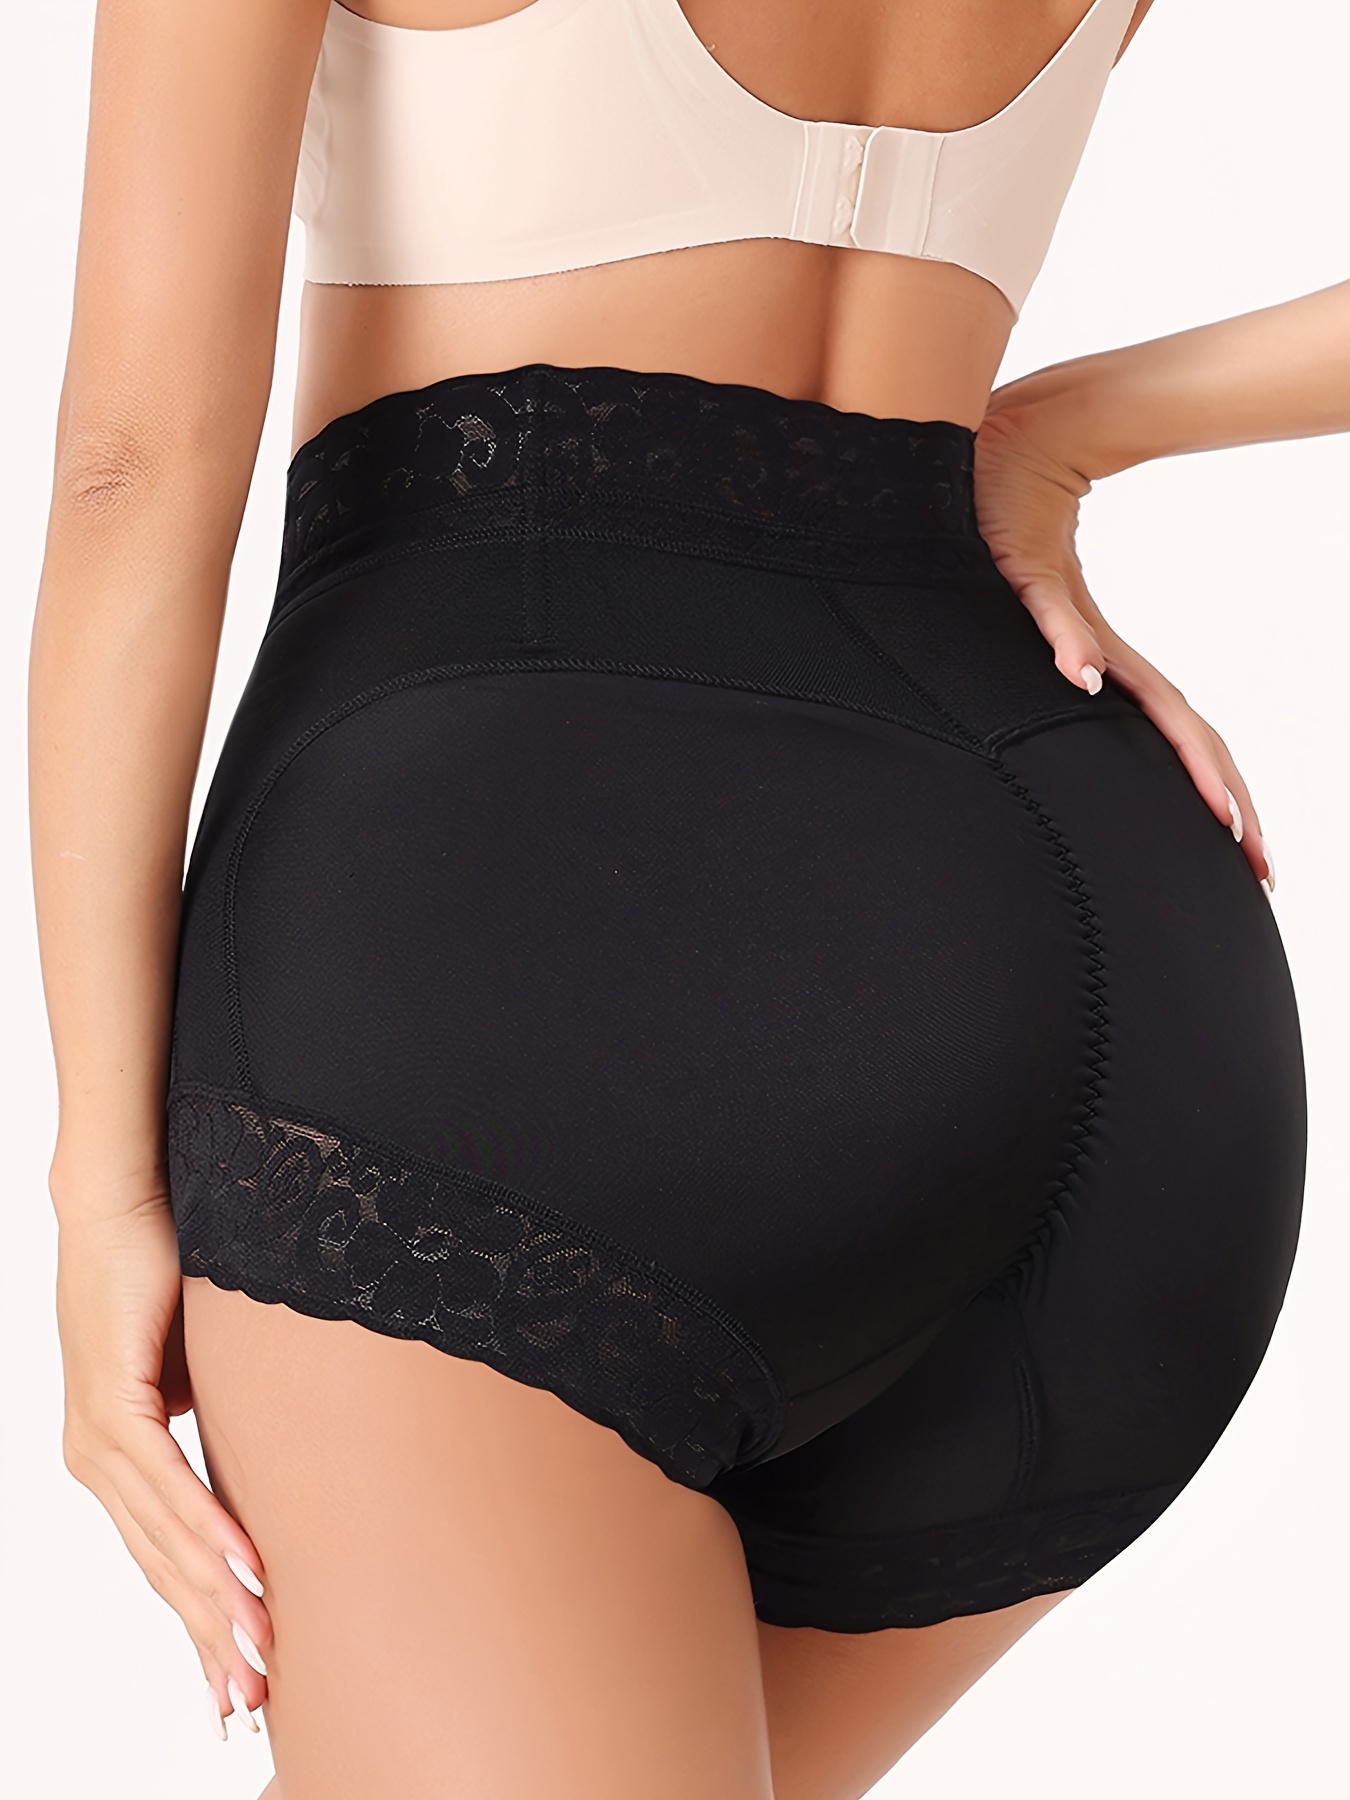 Plus Size Women's High Waist Tummy Control Butt Lifter Shapewear